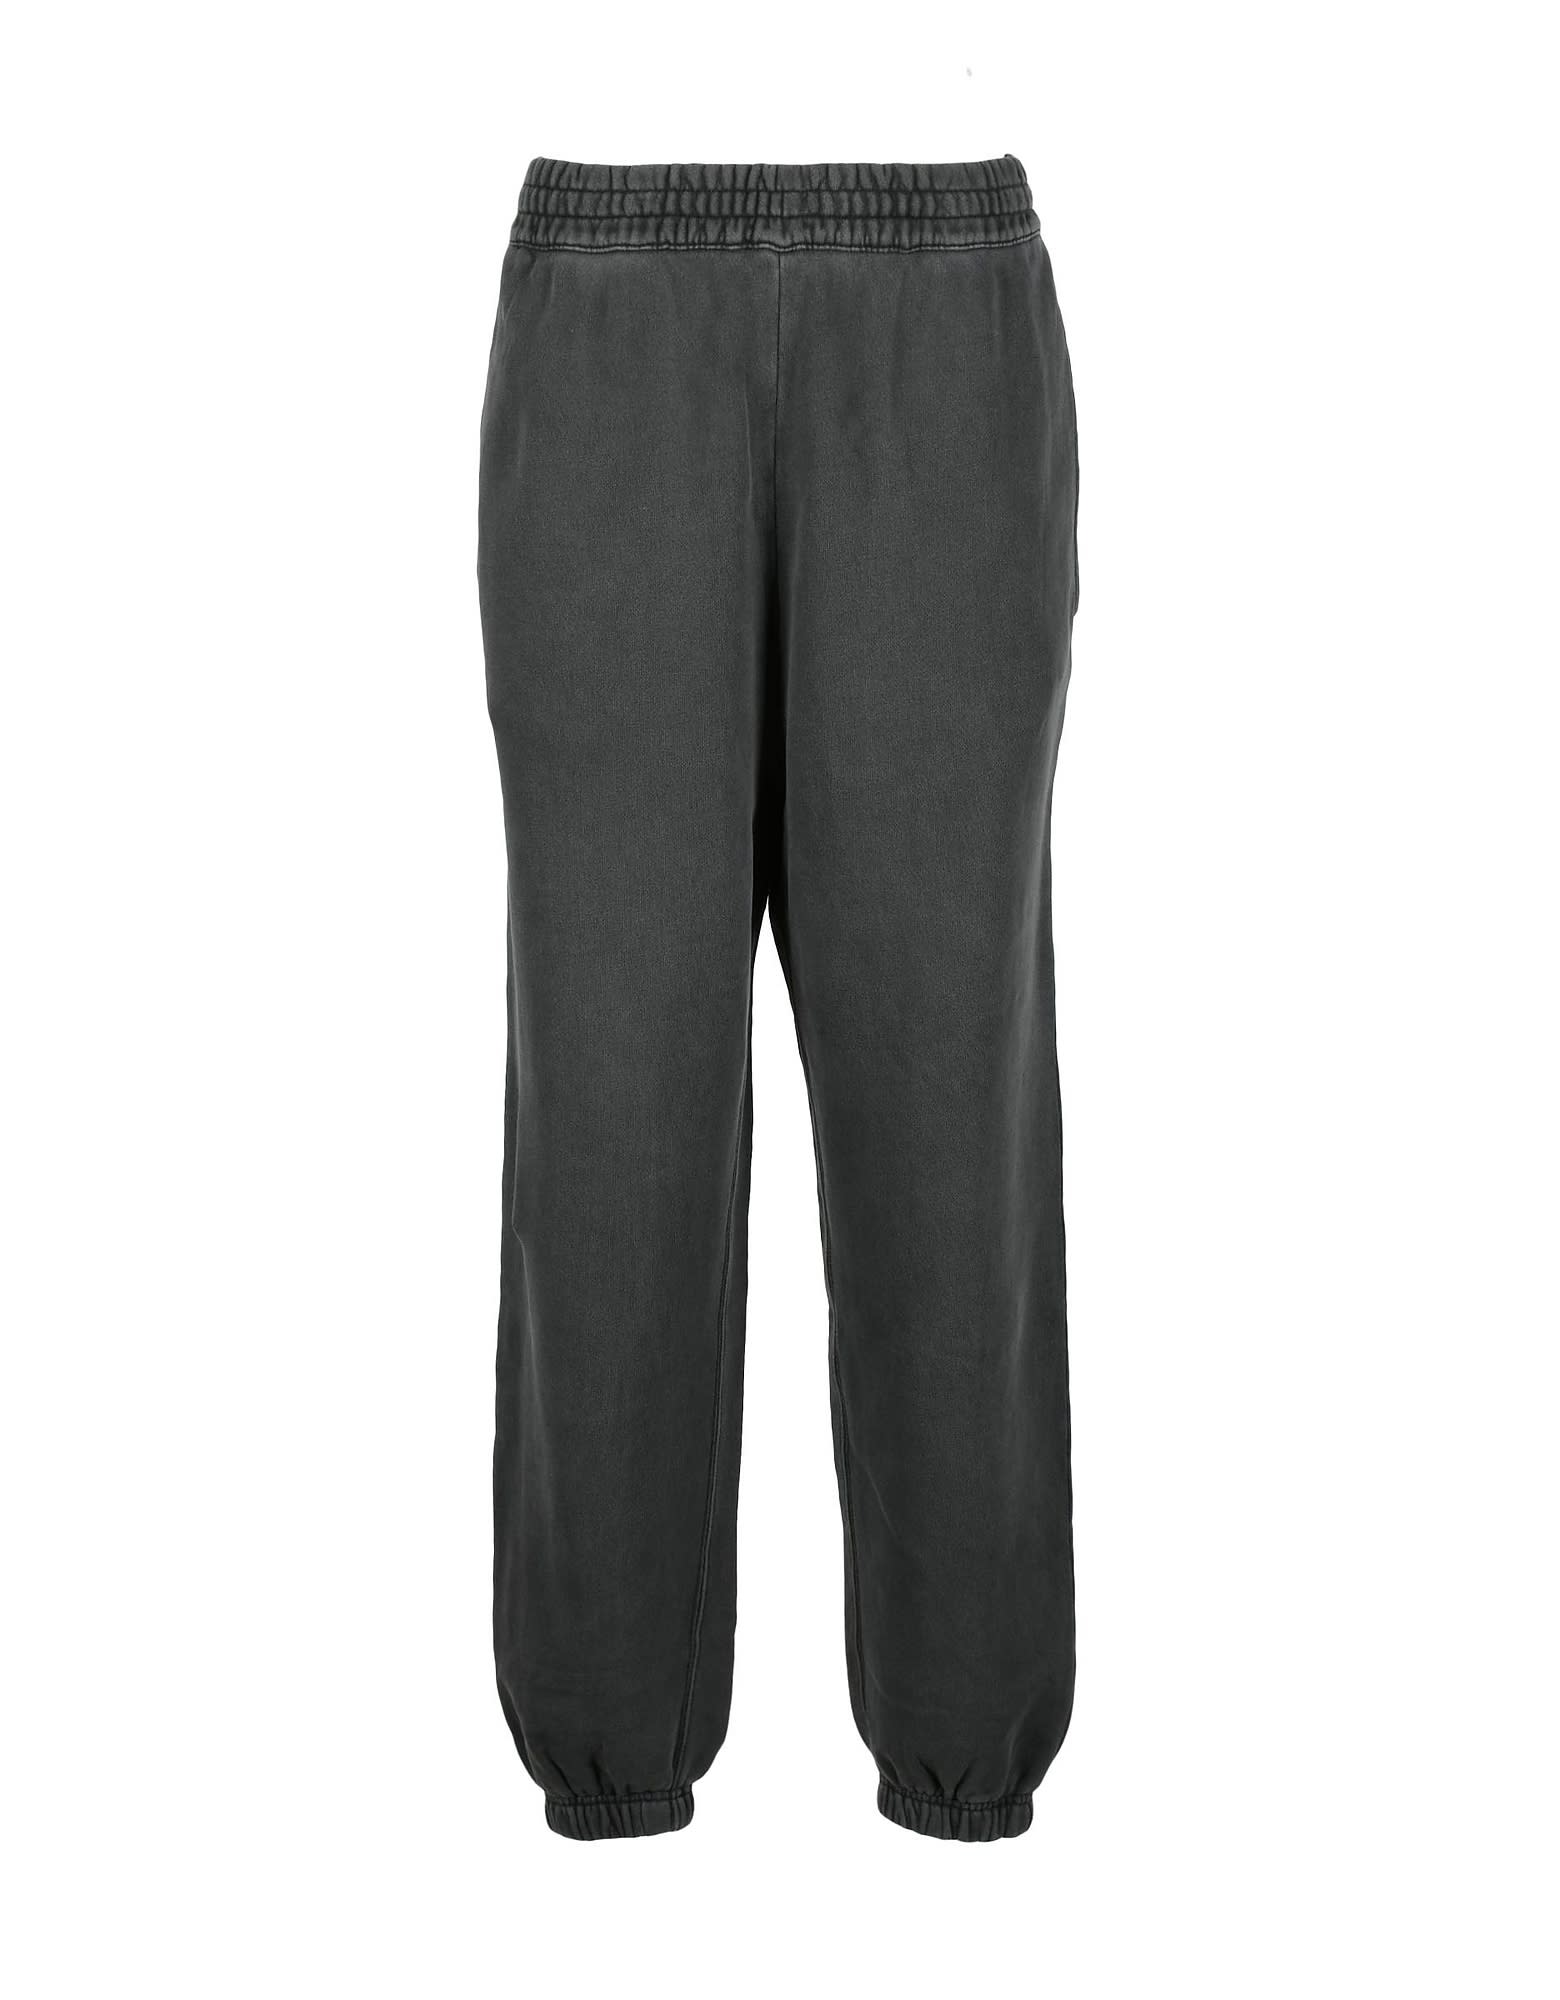 CARHARTT WOMENS grey trousers